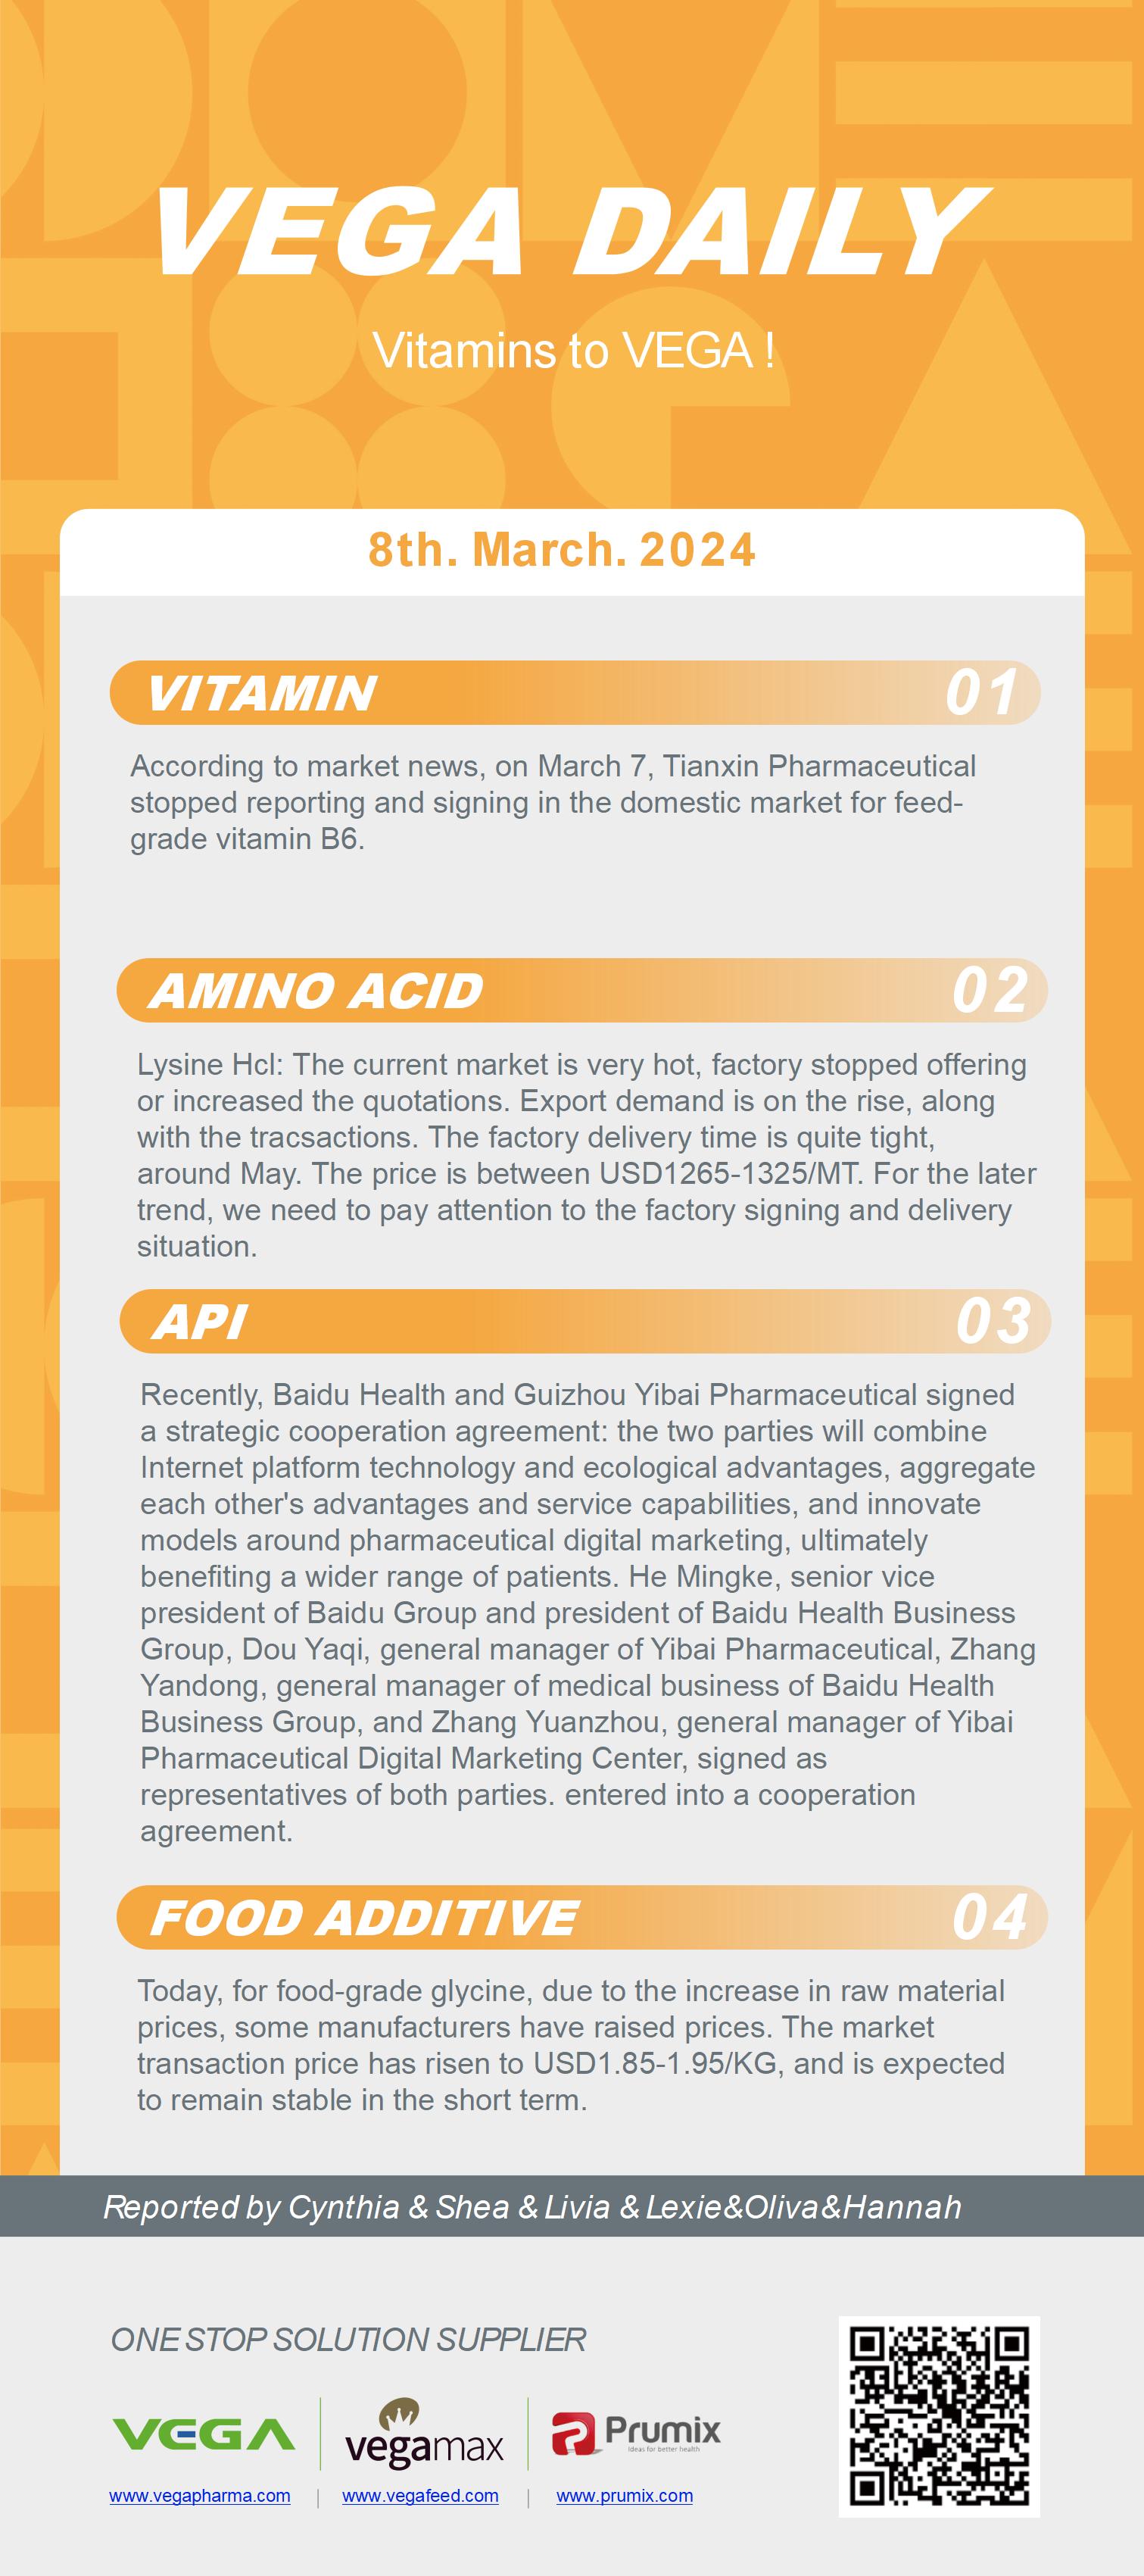 Vega Daily Dated on Mar 8th 2024 Vitamin Amino Acid APl Food Additives.jpg